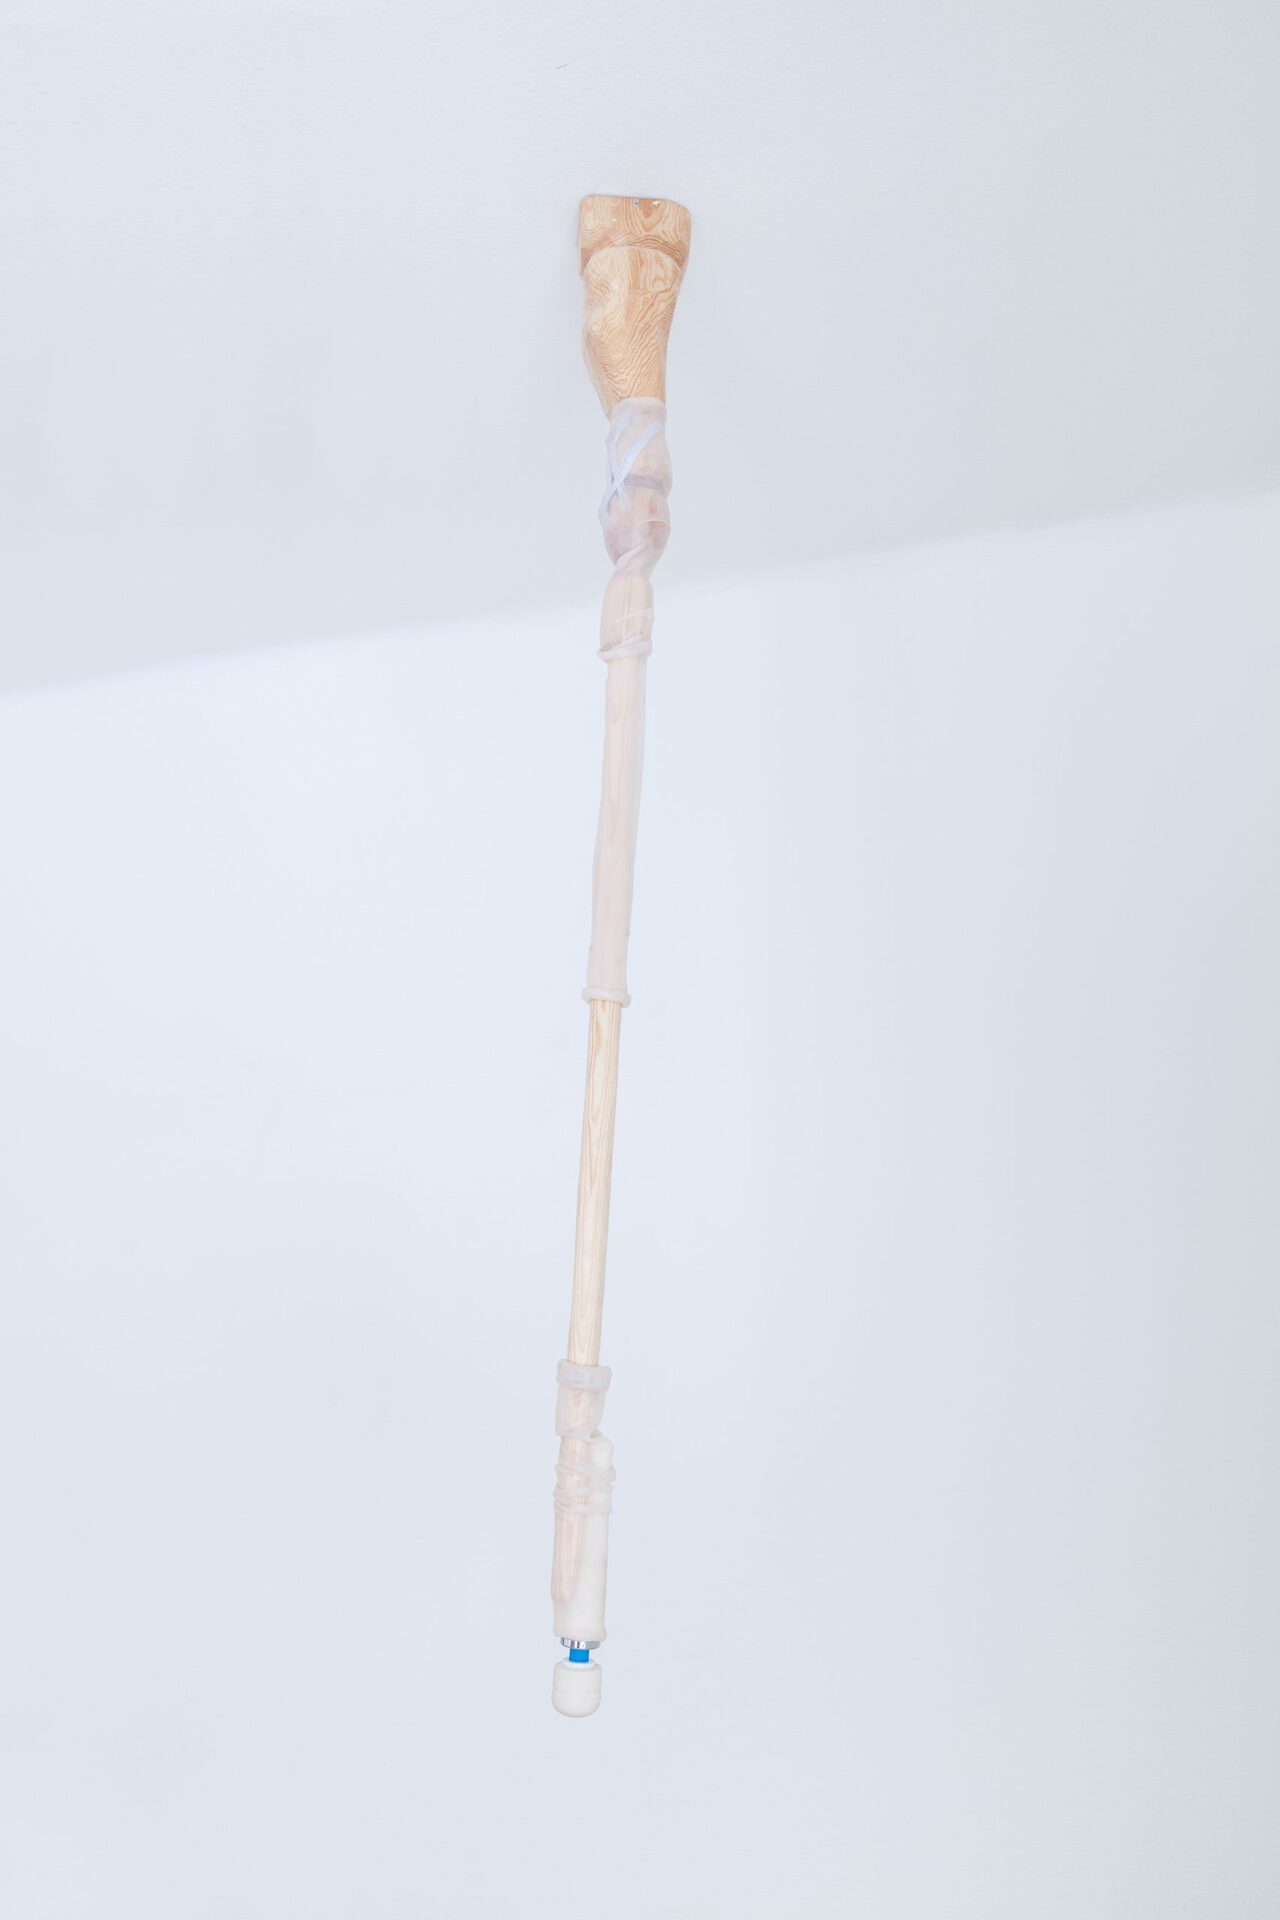 Jens Kothe, magic wand total,2022